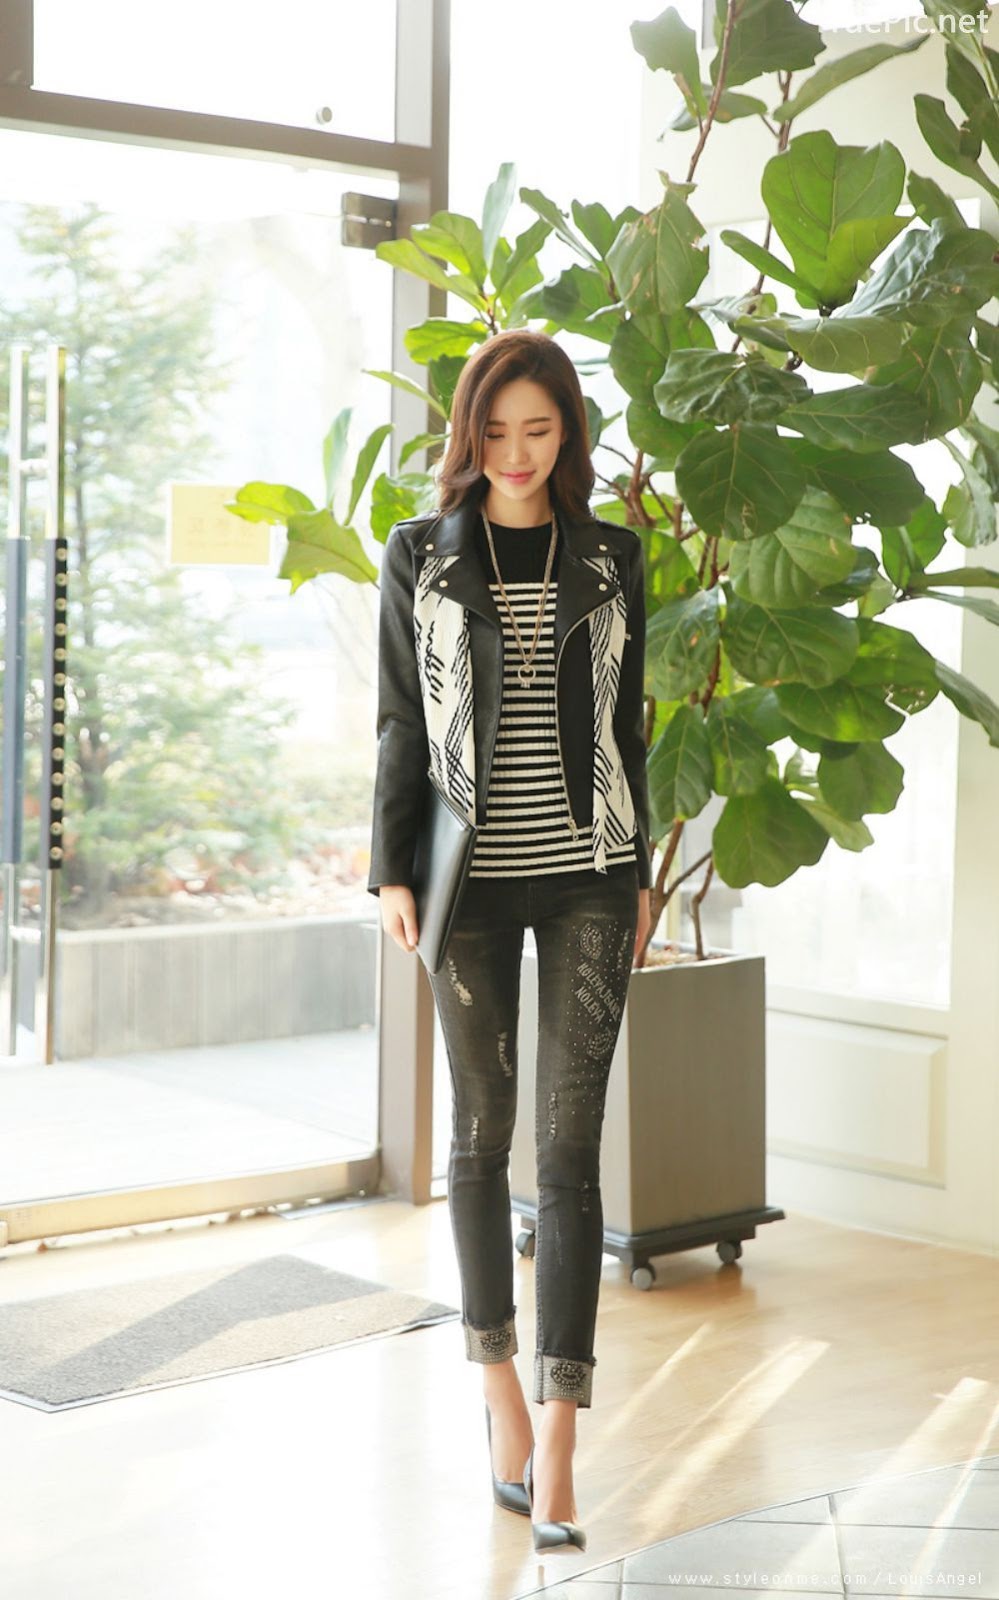 Korean Fashion Model - Park Da Hyun - Indoor Photoshoot Collection - TruePic.net - Picture 39